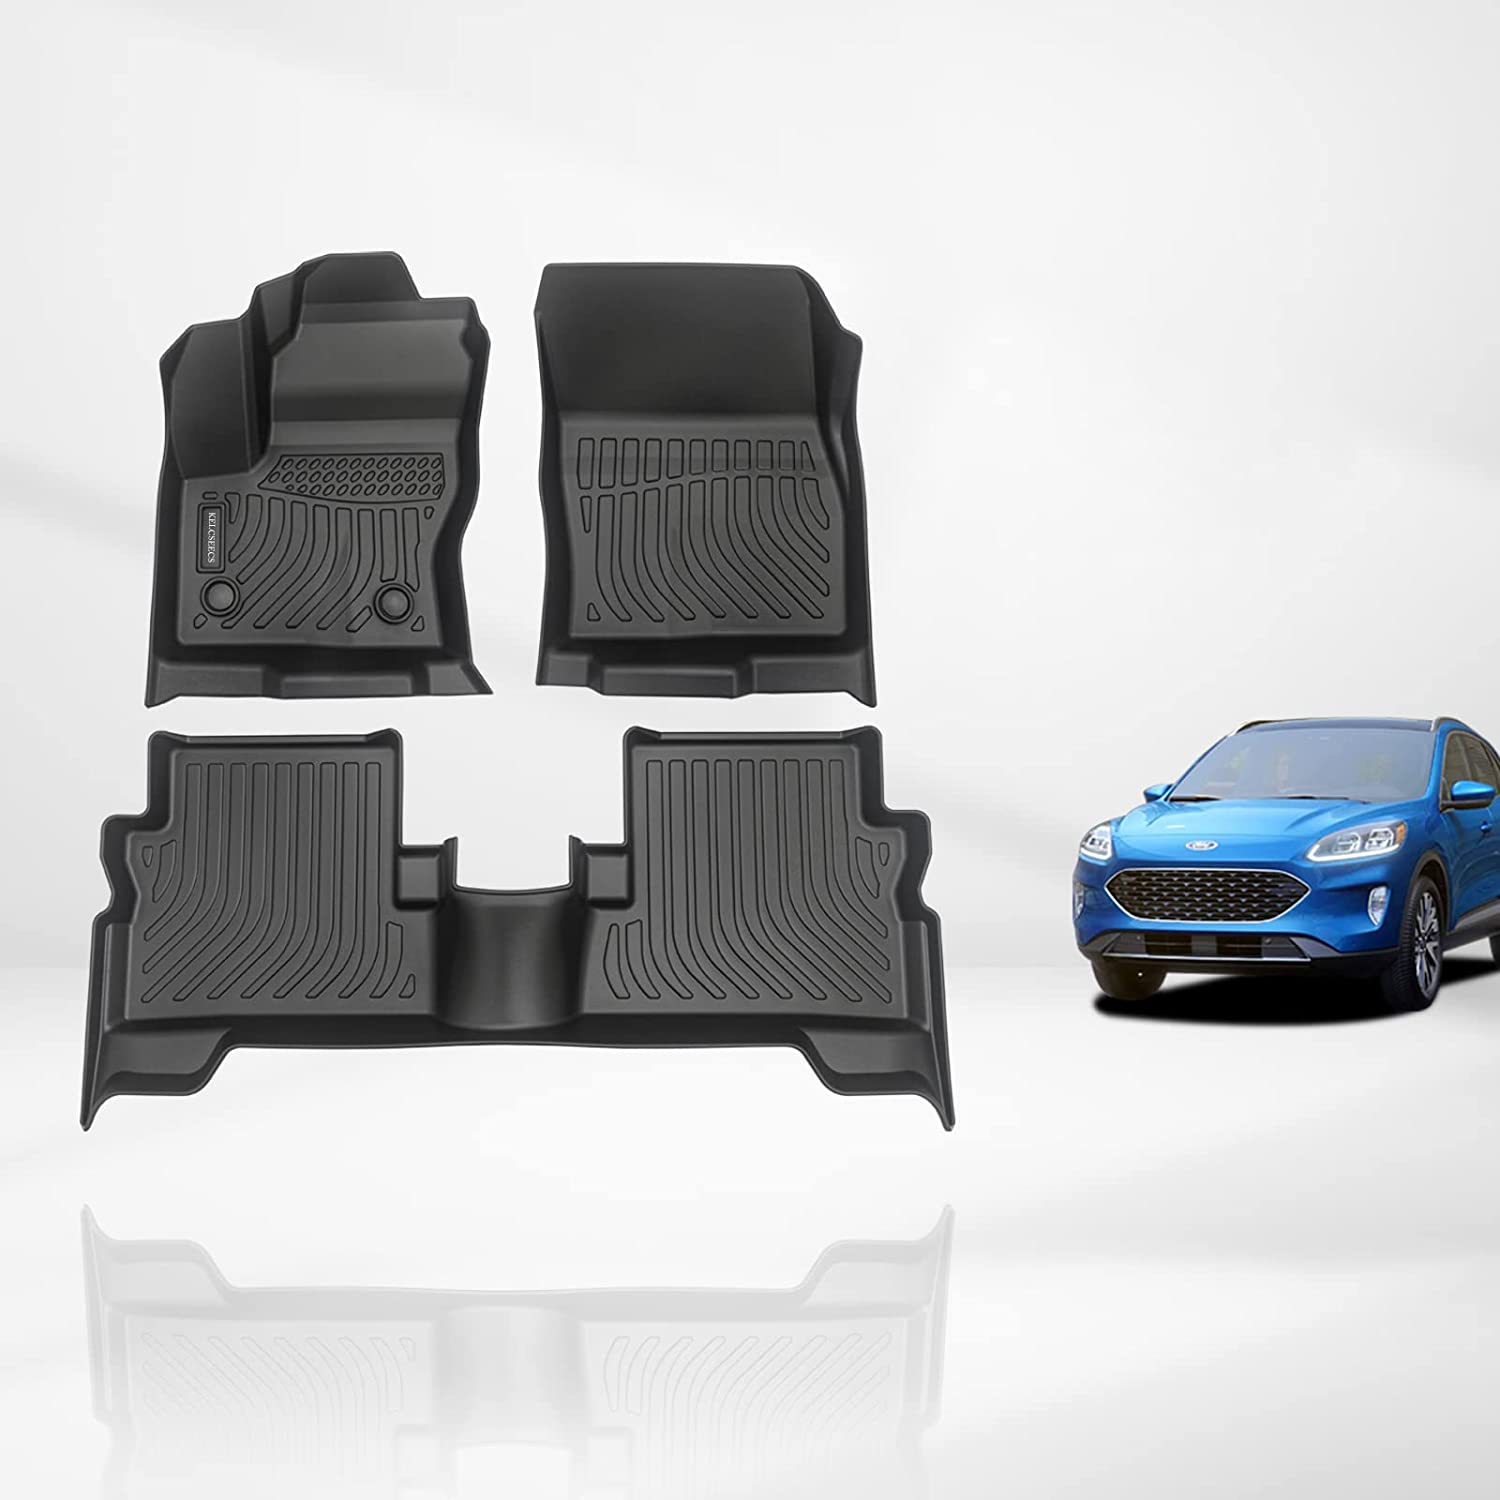 Kelcseecs All Weather 3D Tech Design TPE Car Floor Mats Floor Liners For Ford C-max 2013-2019